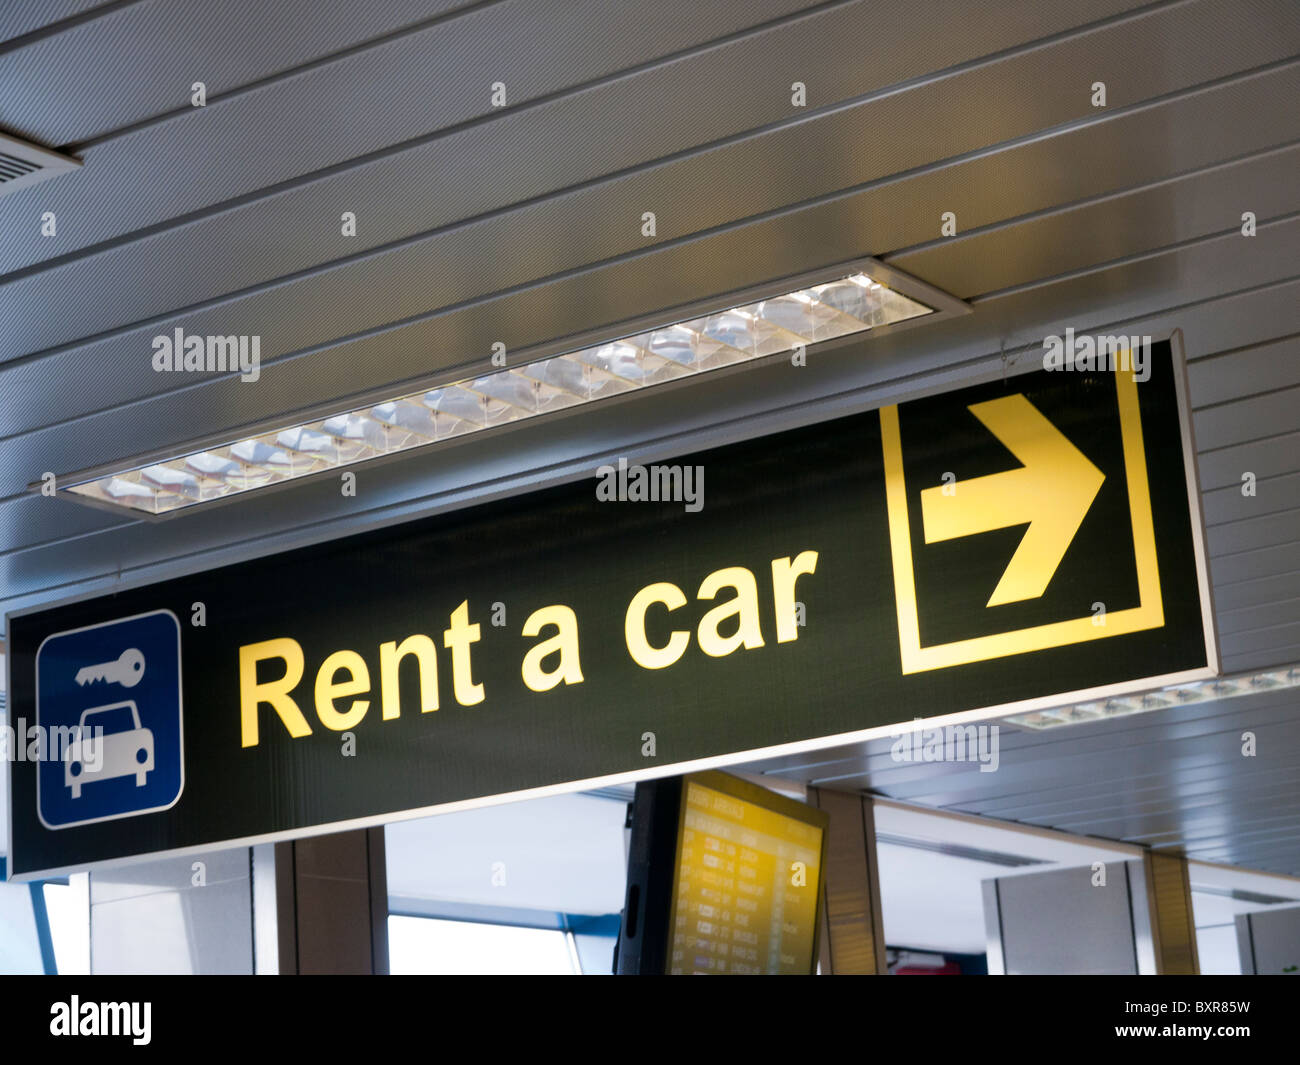 Rent a car sign at an airport Stock Photo